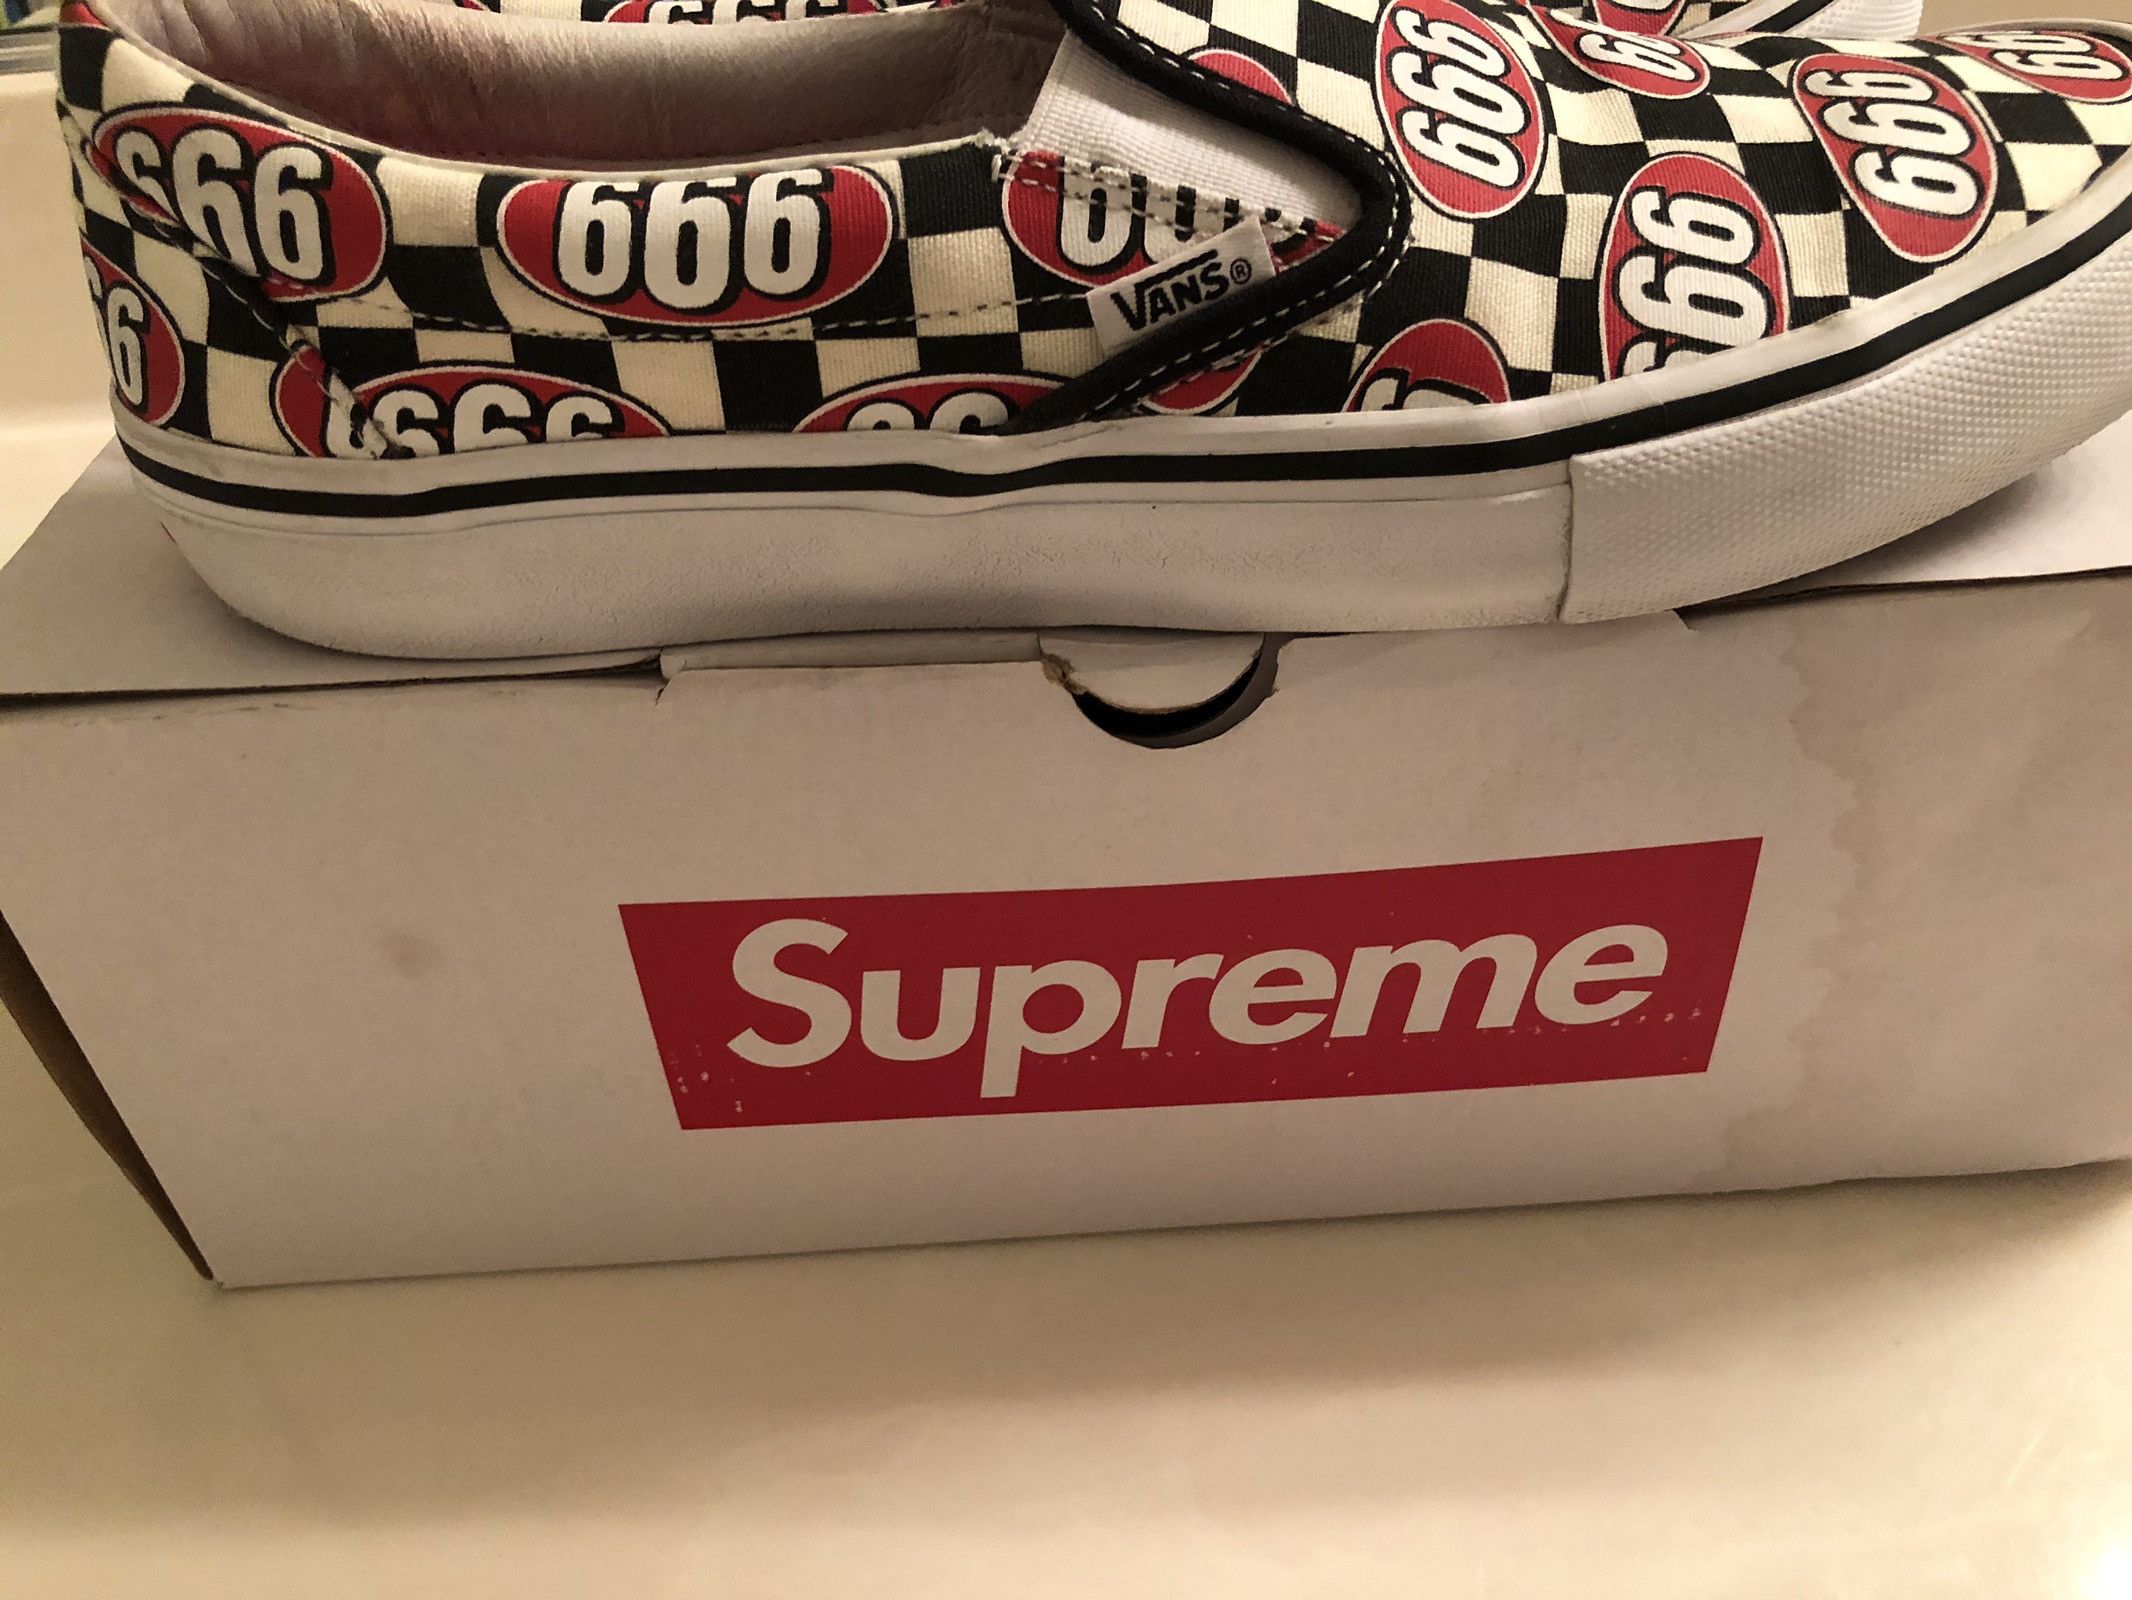 Supreme Supreme X Vans 666 checkerboard Slip-ons Size US 10 / EU 43 - 5 Preview